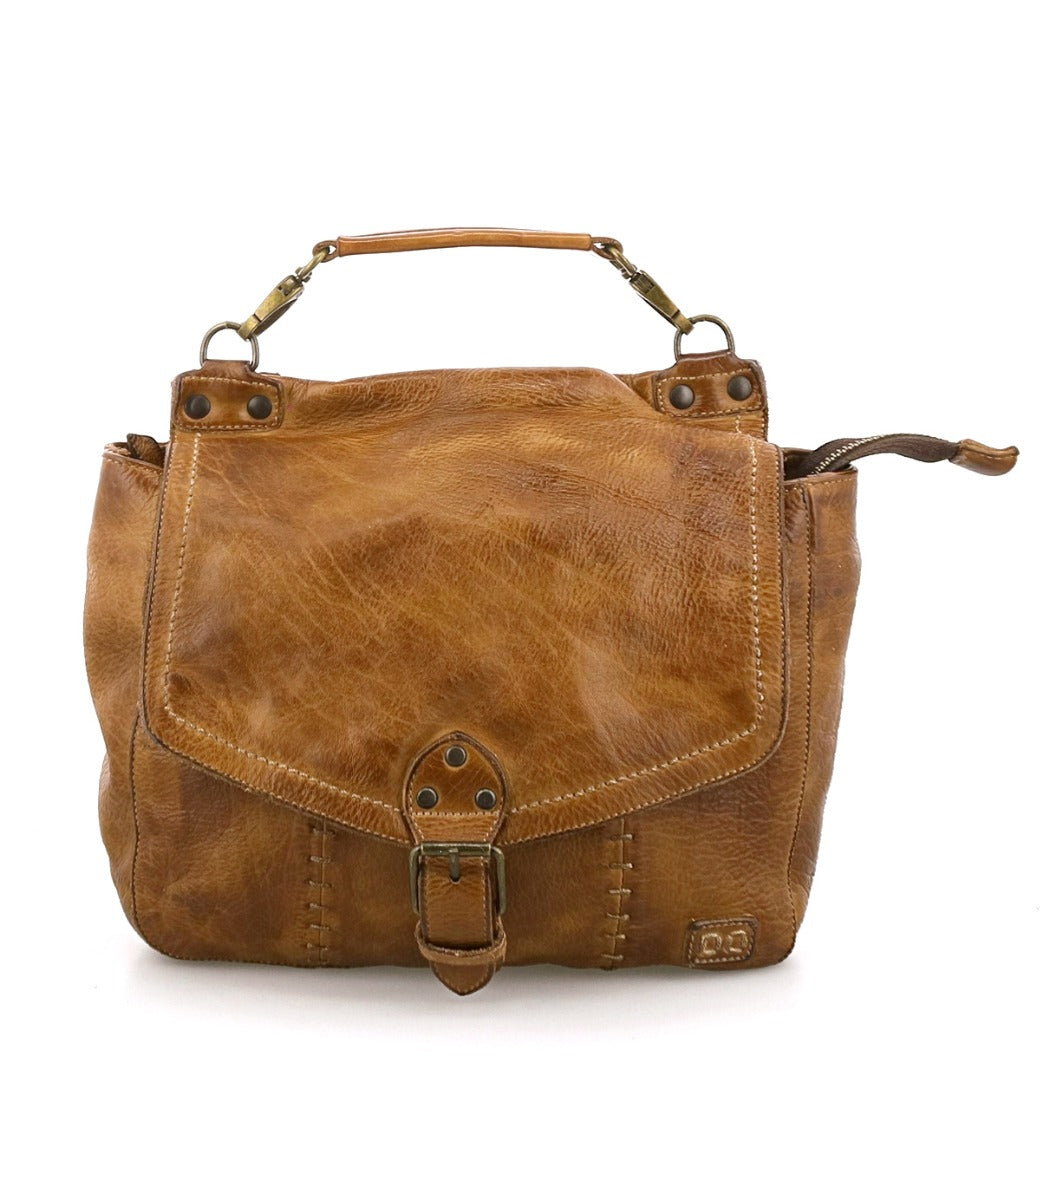 A Bathsheba leather satchel bag from Bed Stu.